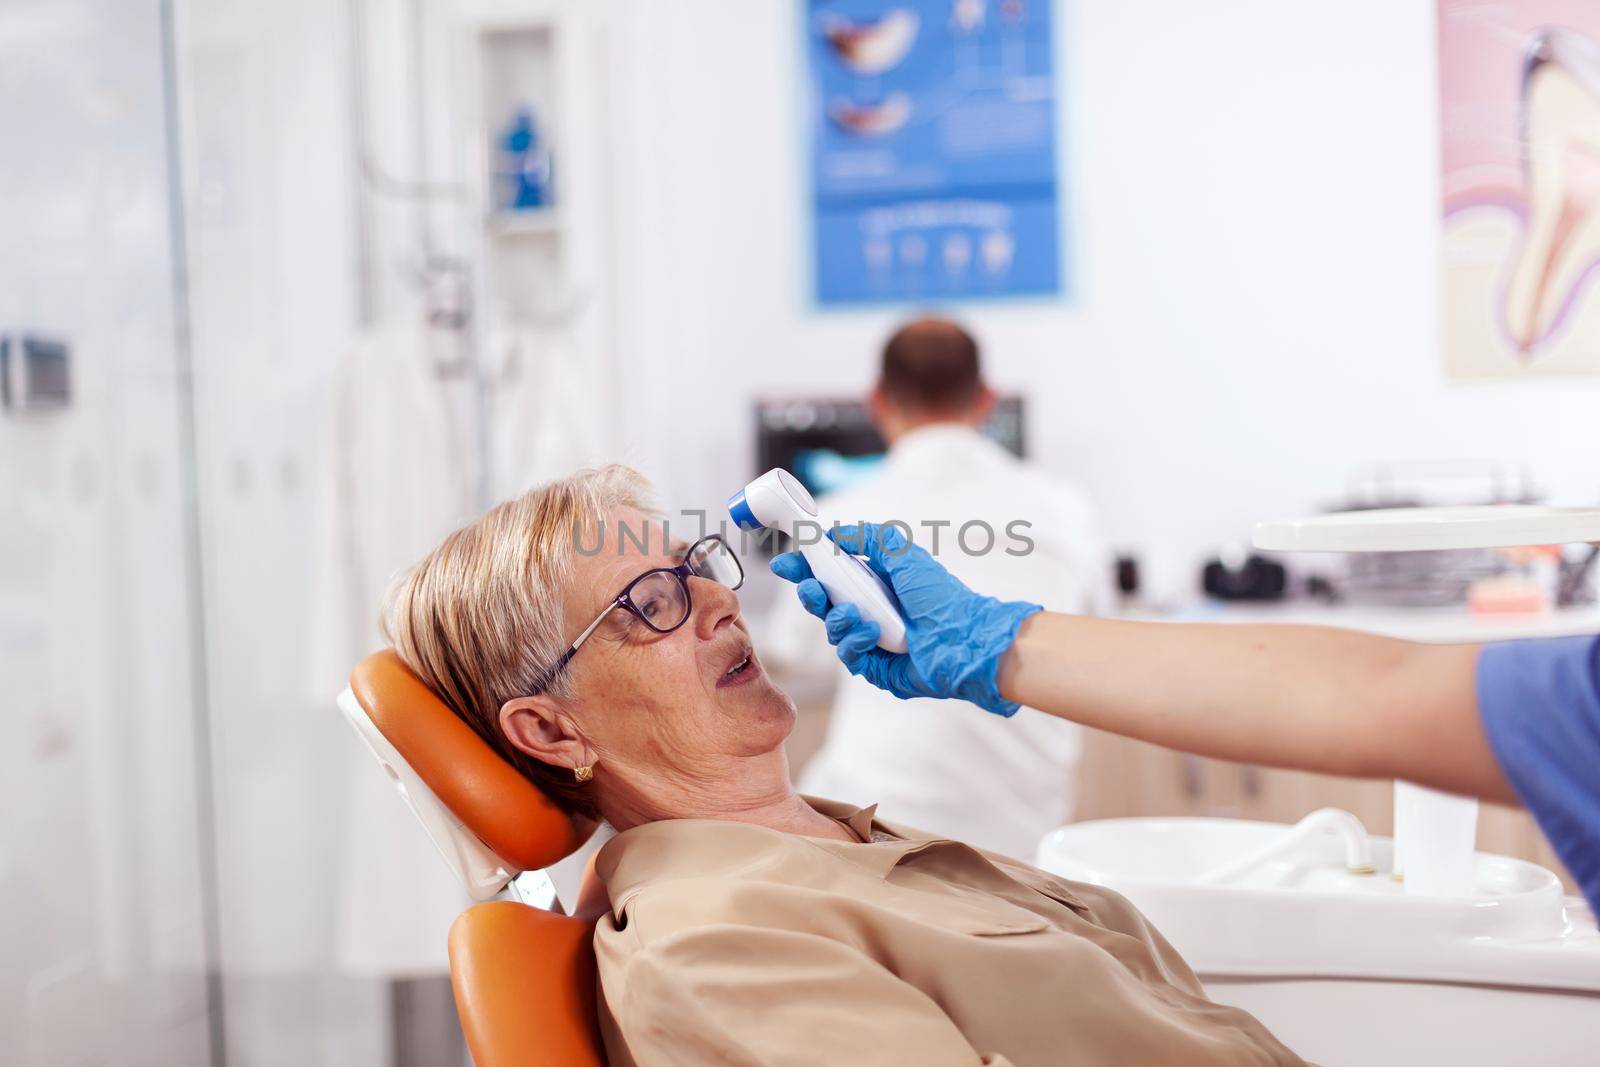 Dentist assistant holding digital body temperature indicator by DCStudio